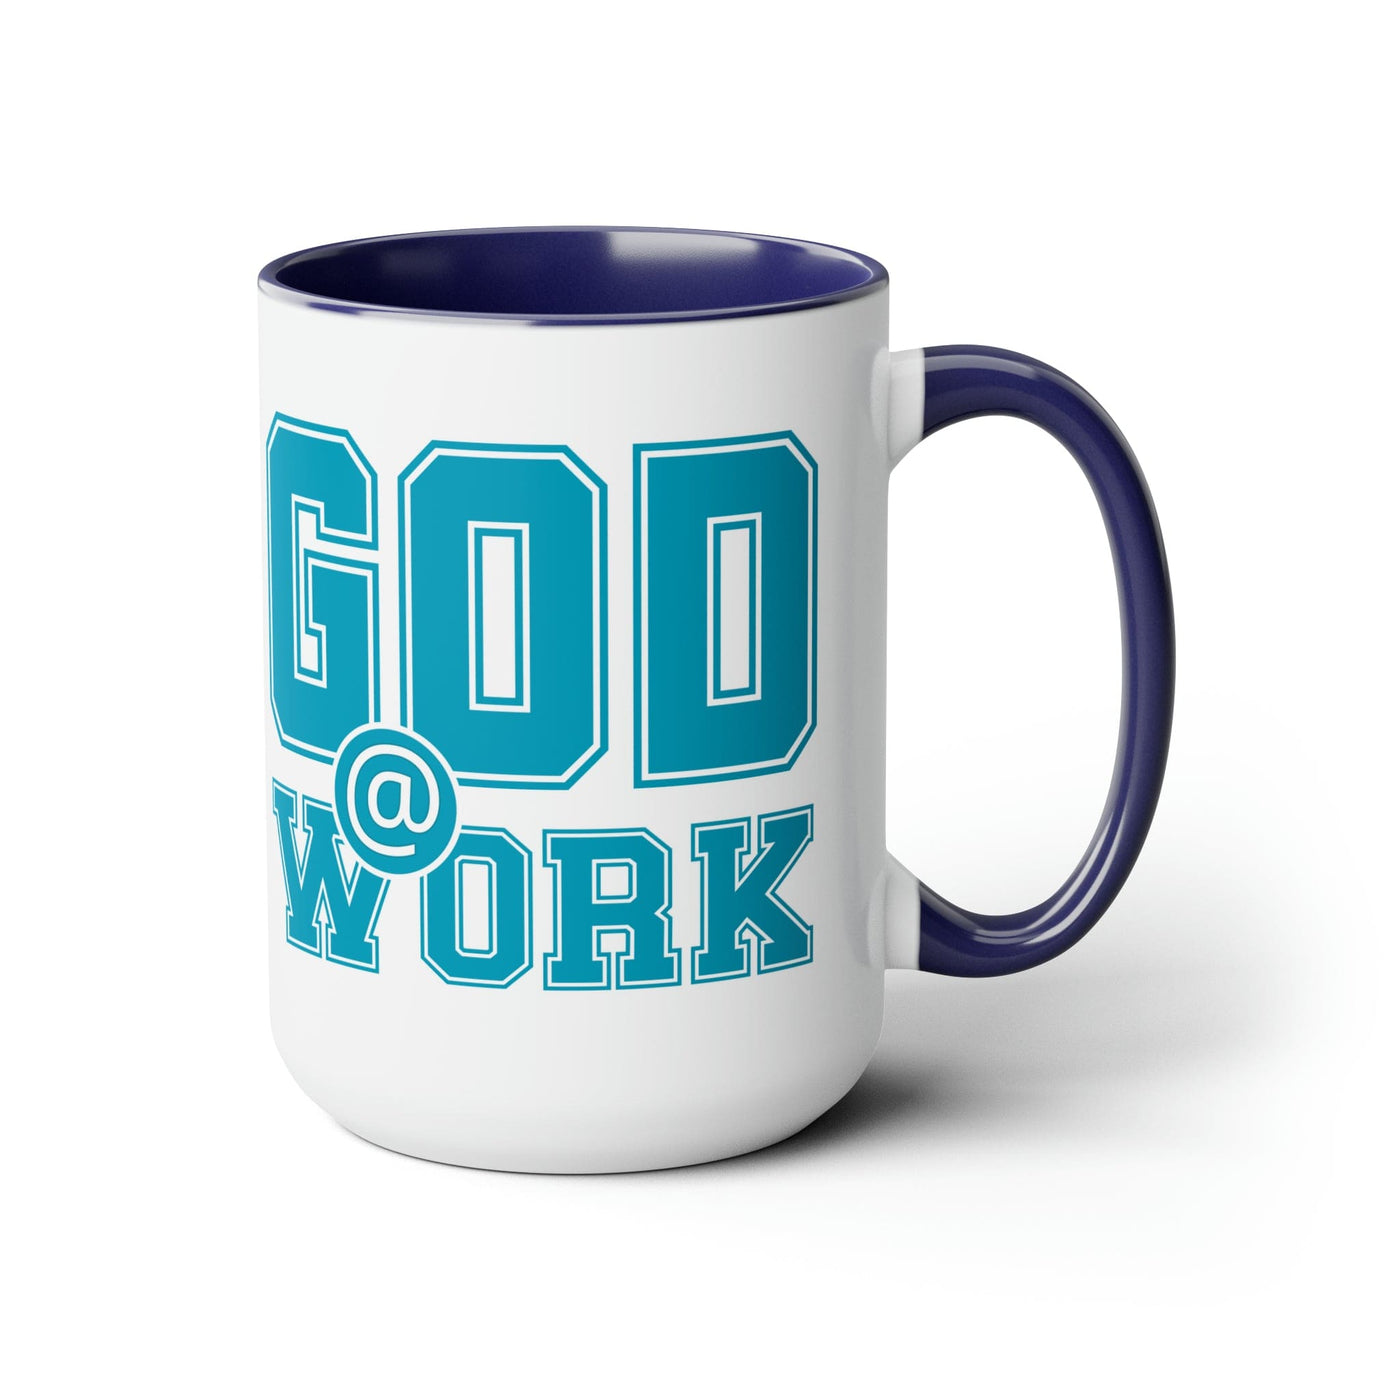 Accent Ceramic Coffee Mug 15oz - God @ Work Blue Green And White Print -